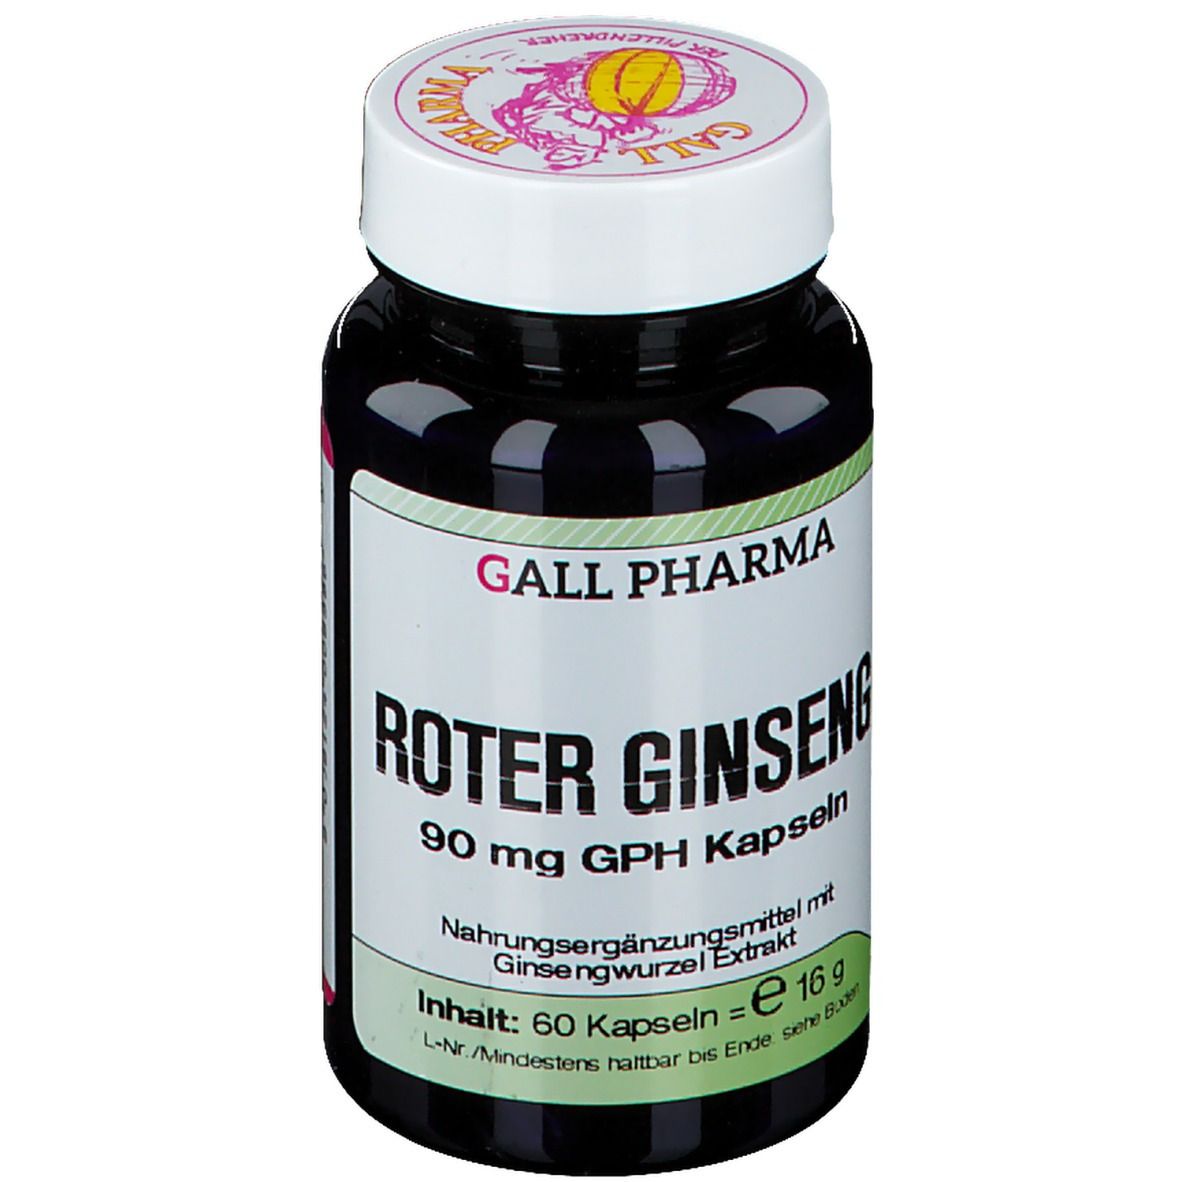 Gall Pharma Roter Ginseng 90 mg GPH Kapseln